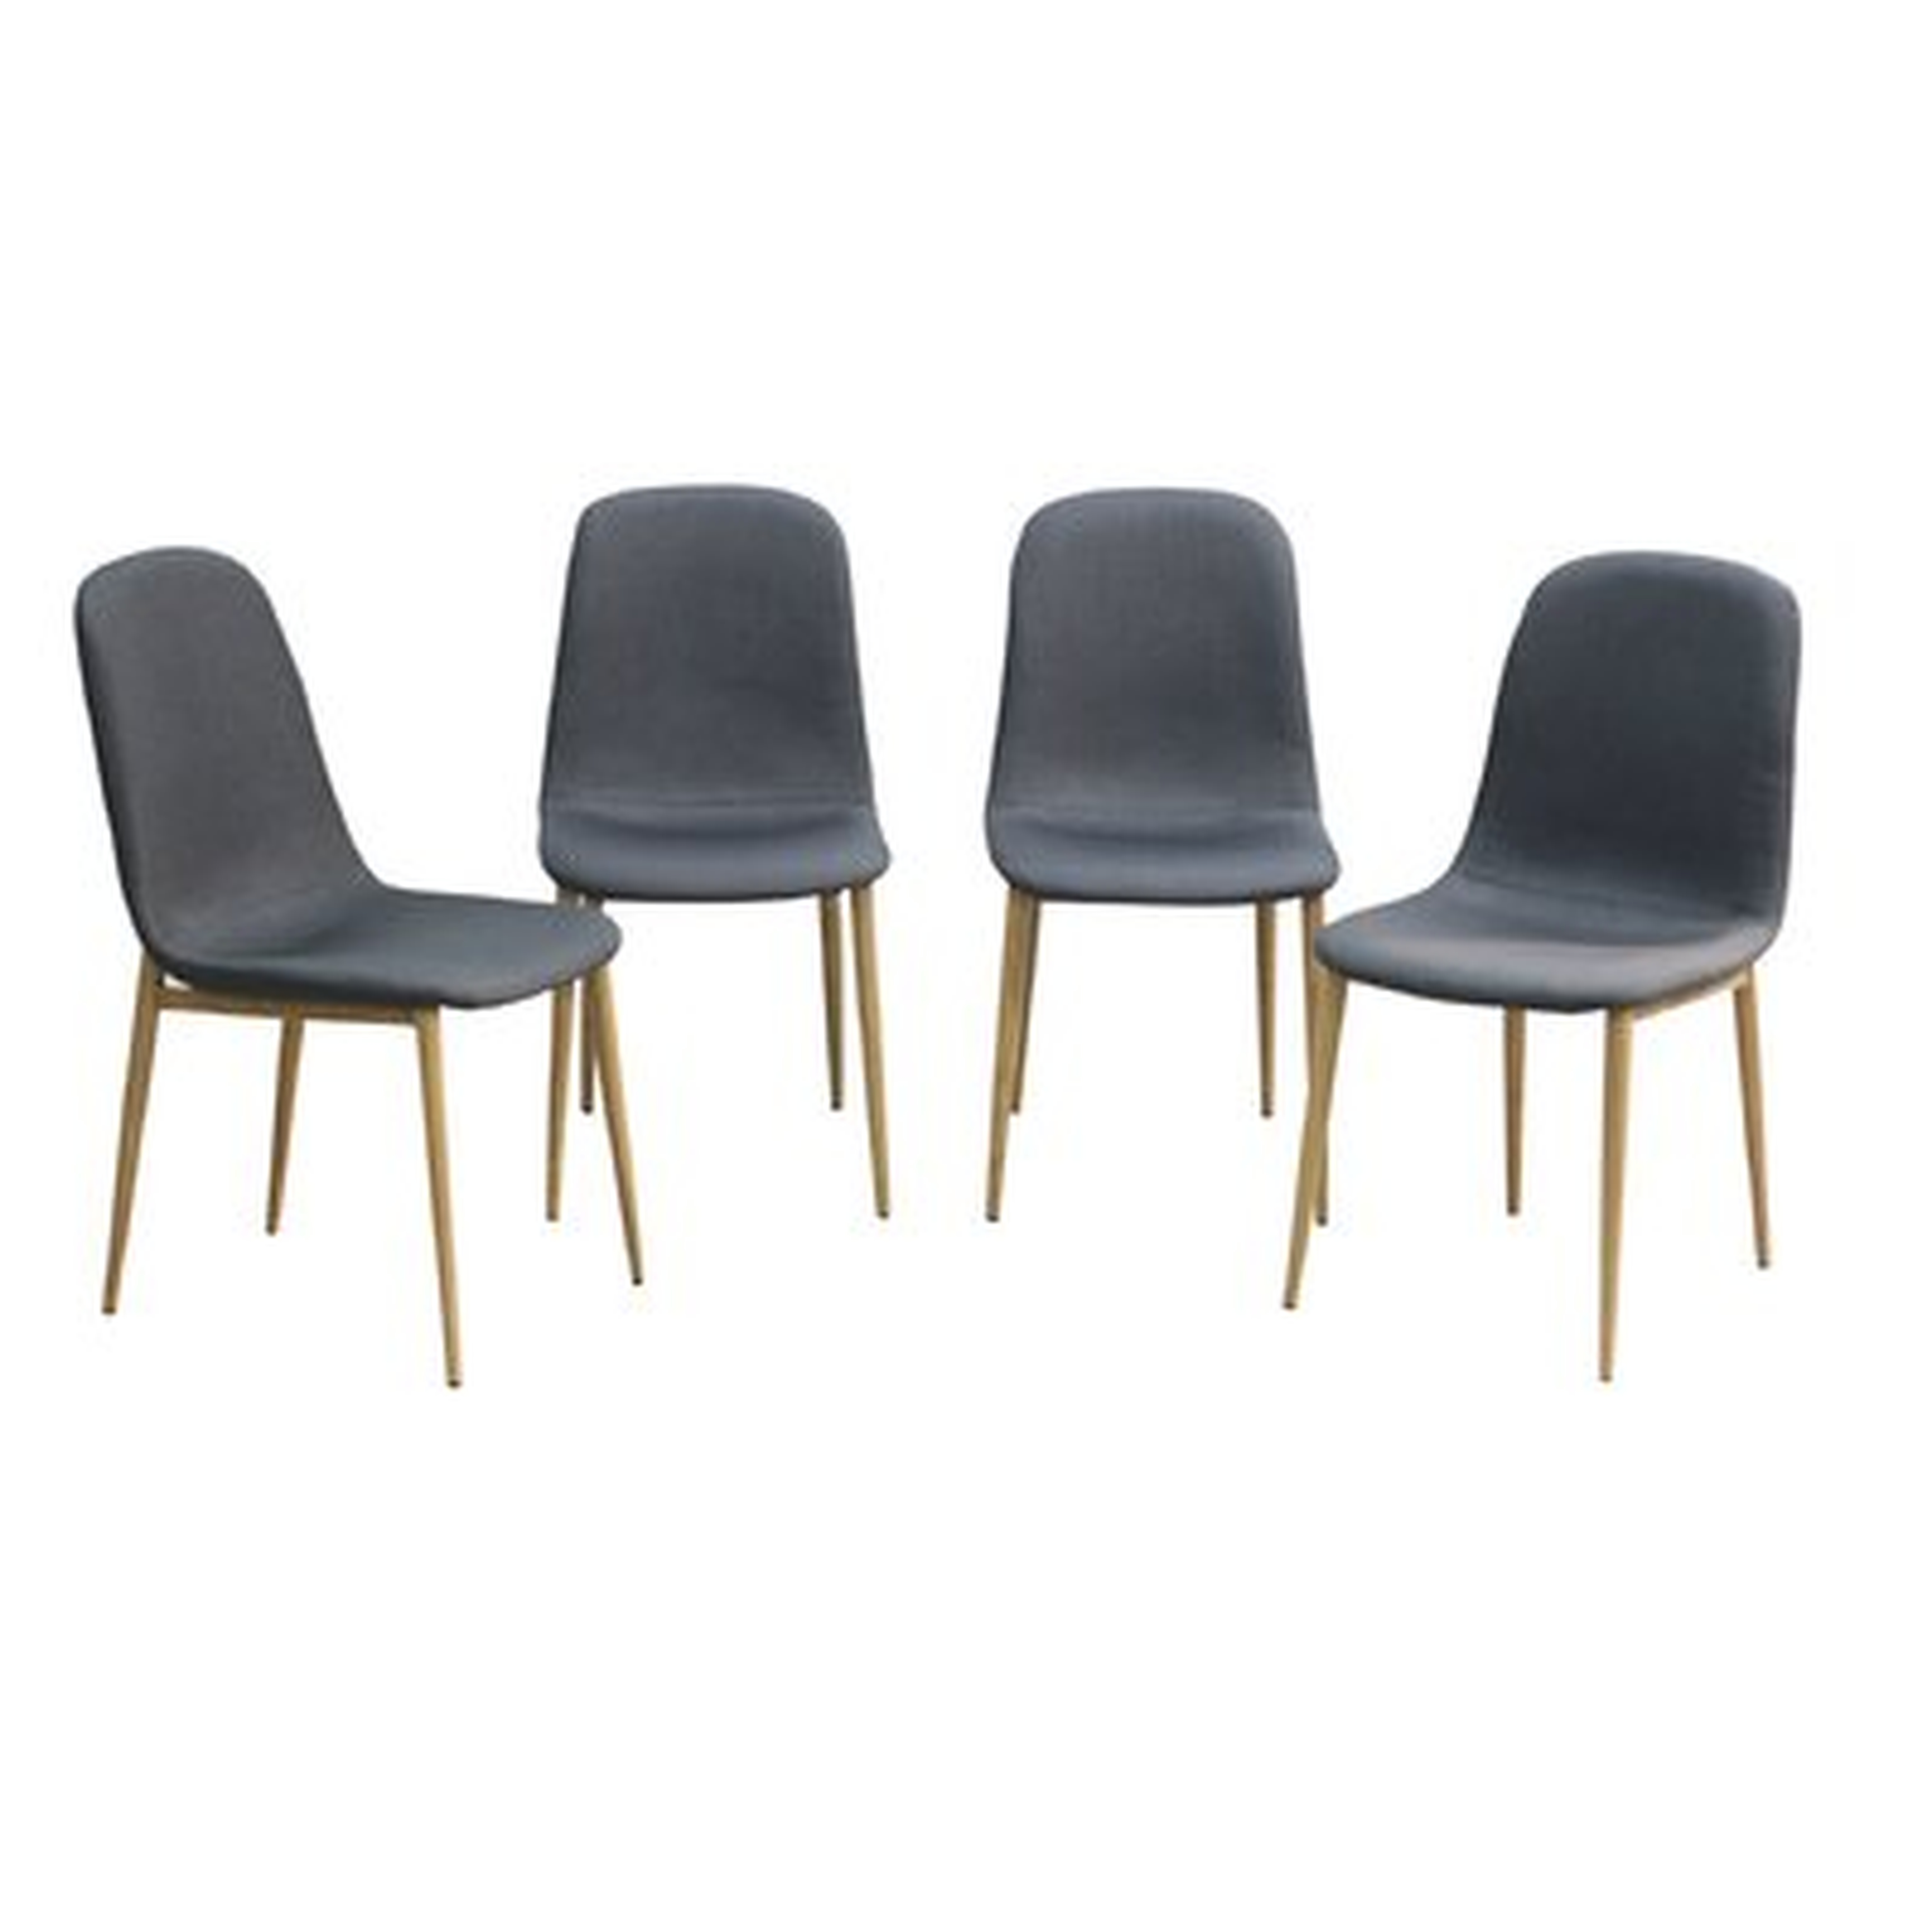 Romeo Upholstered Dining Chair (set of 4) - Wayfair